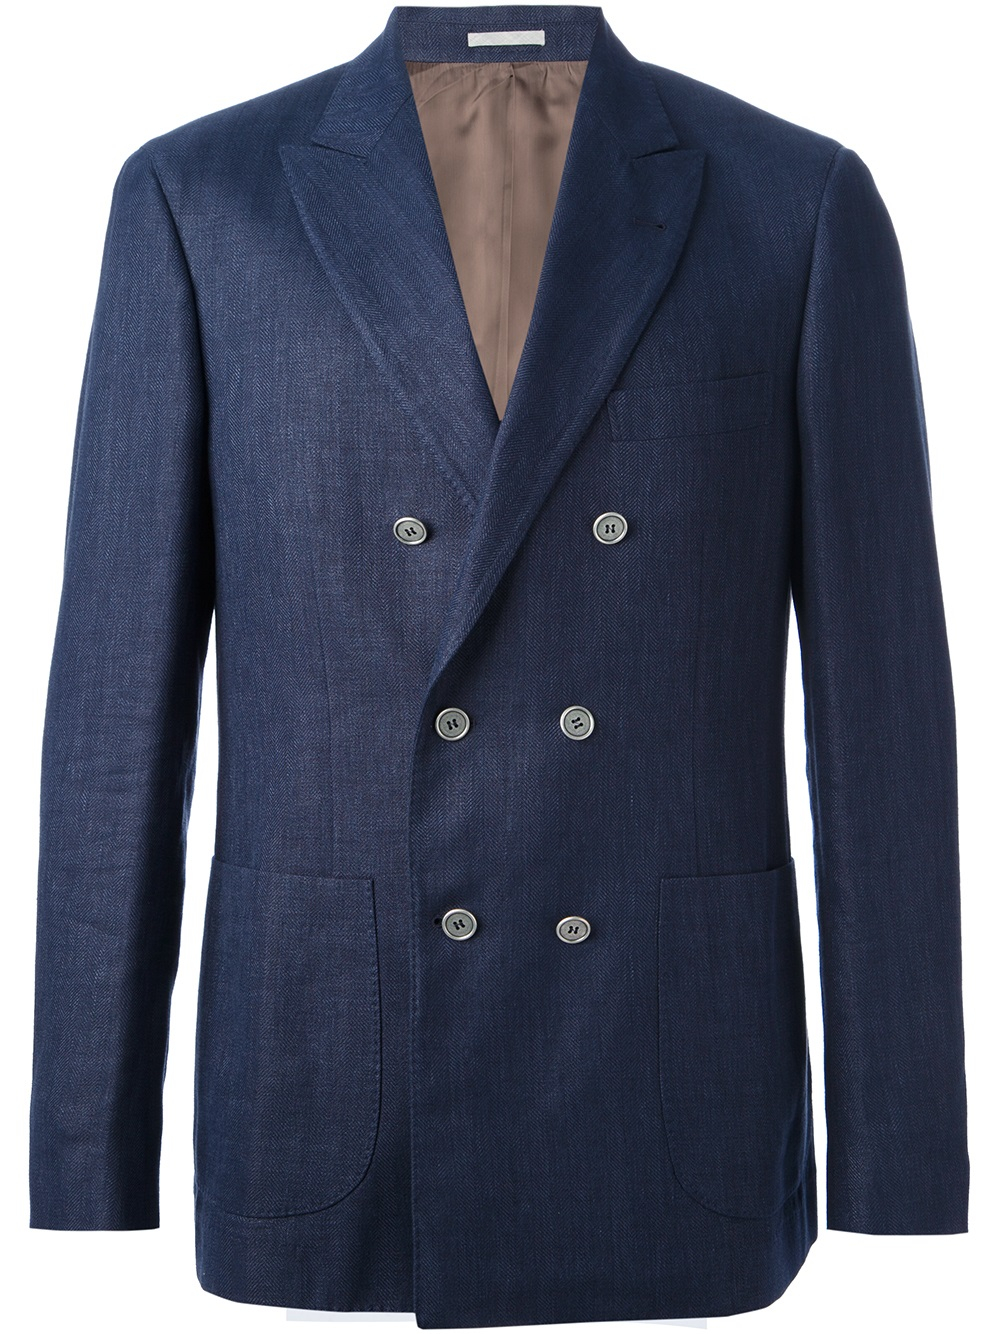 Lyst - Brunello Cucinelli Double Breasted Blazer in Blue for Men